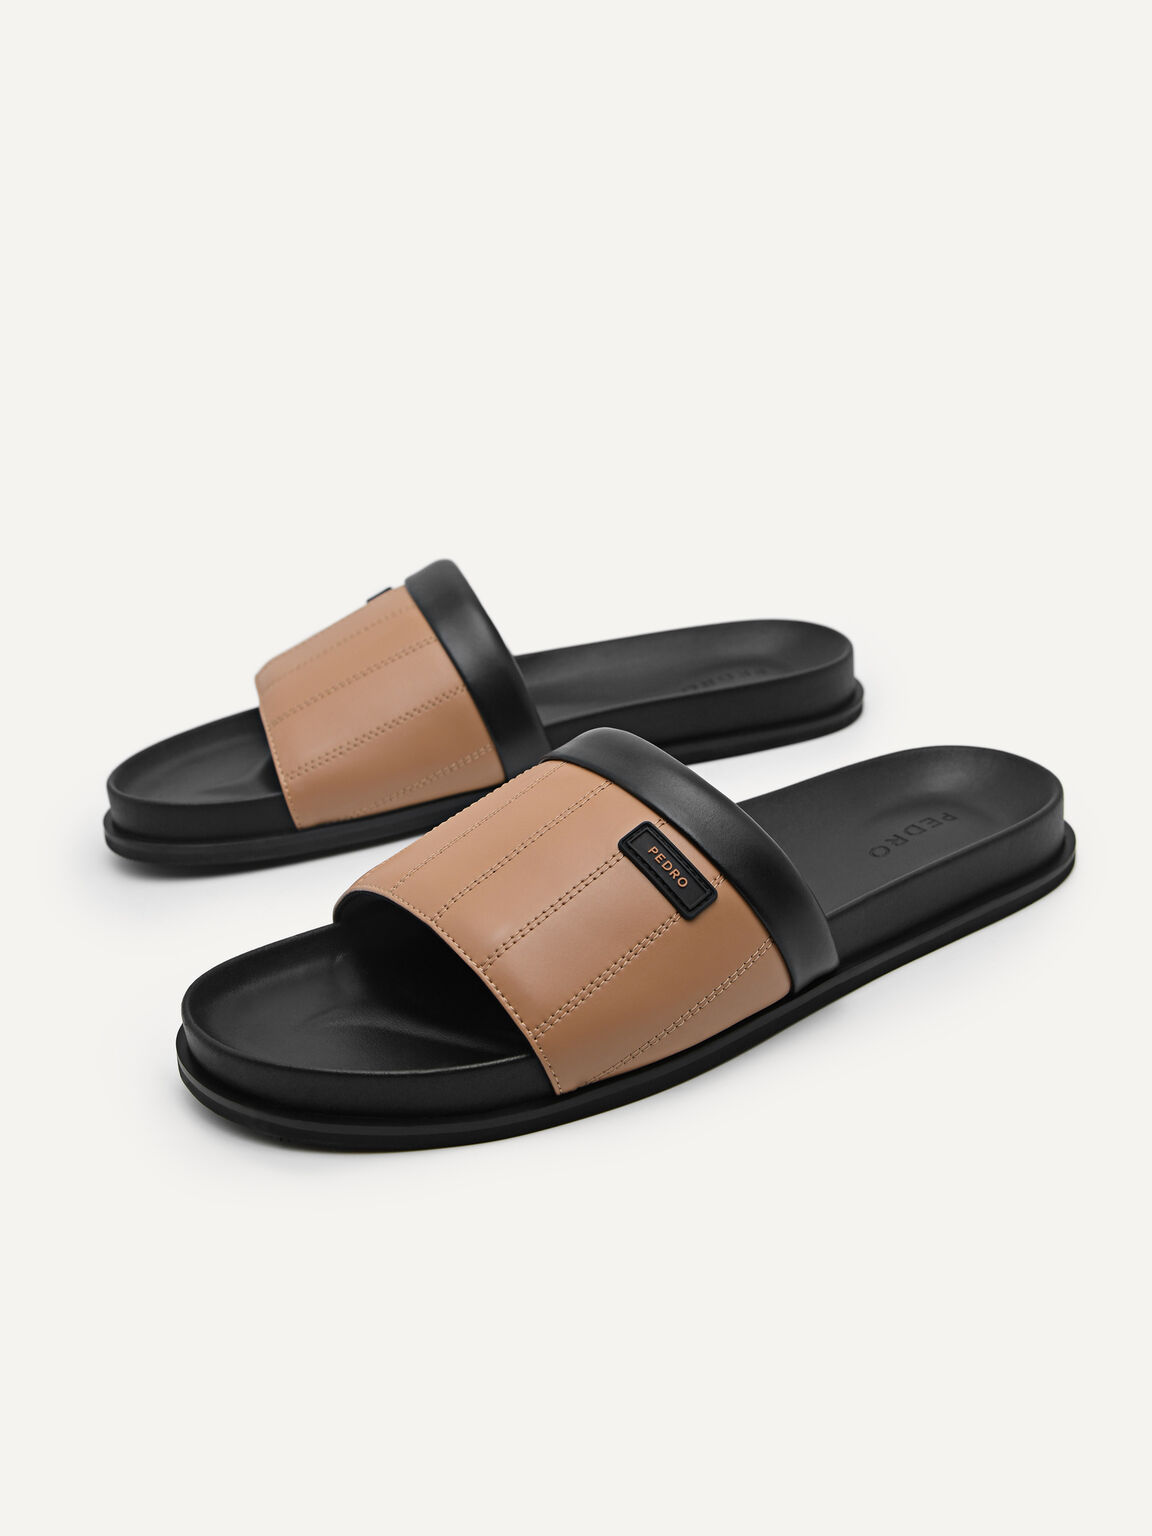 Camel Slide Sandals - PEDRO EU